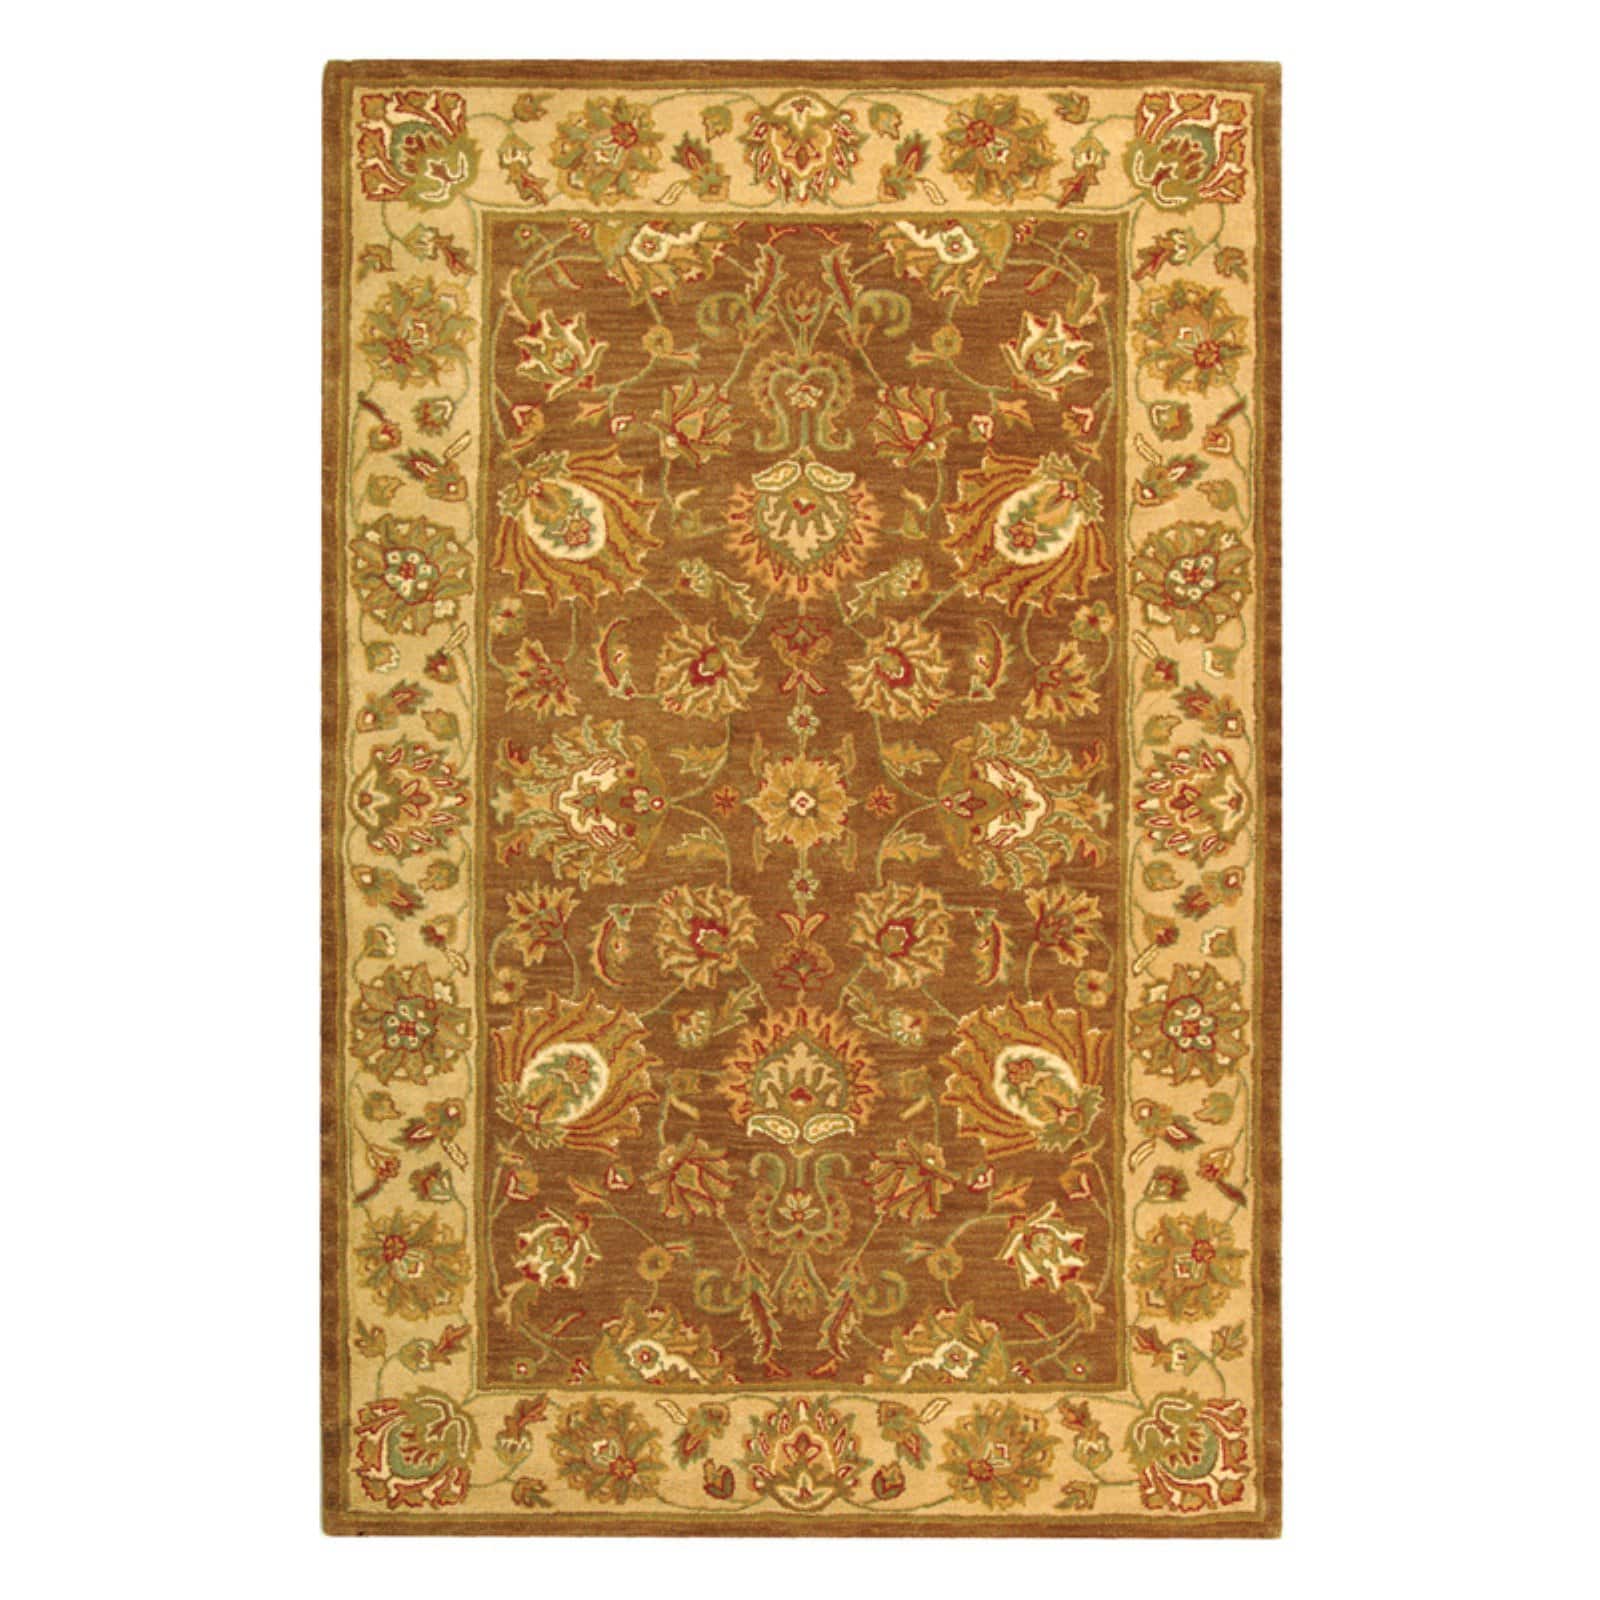 SAFAVIEH Heritage Regis Traditional Wool Area Rug, Brown/Ivory, 2' x 3' - image 4 of 9